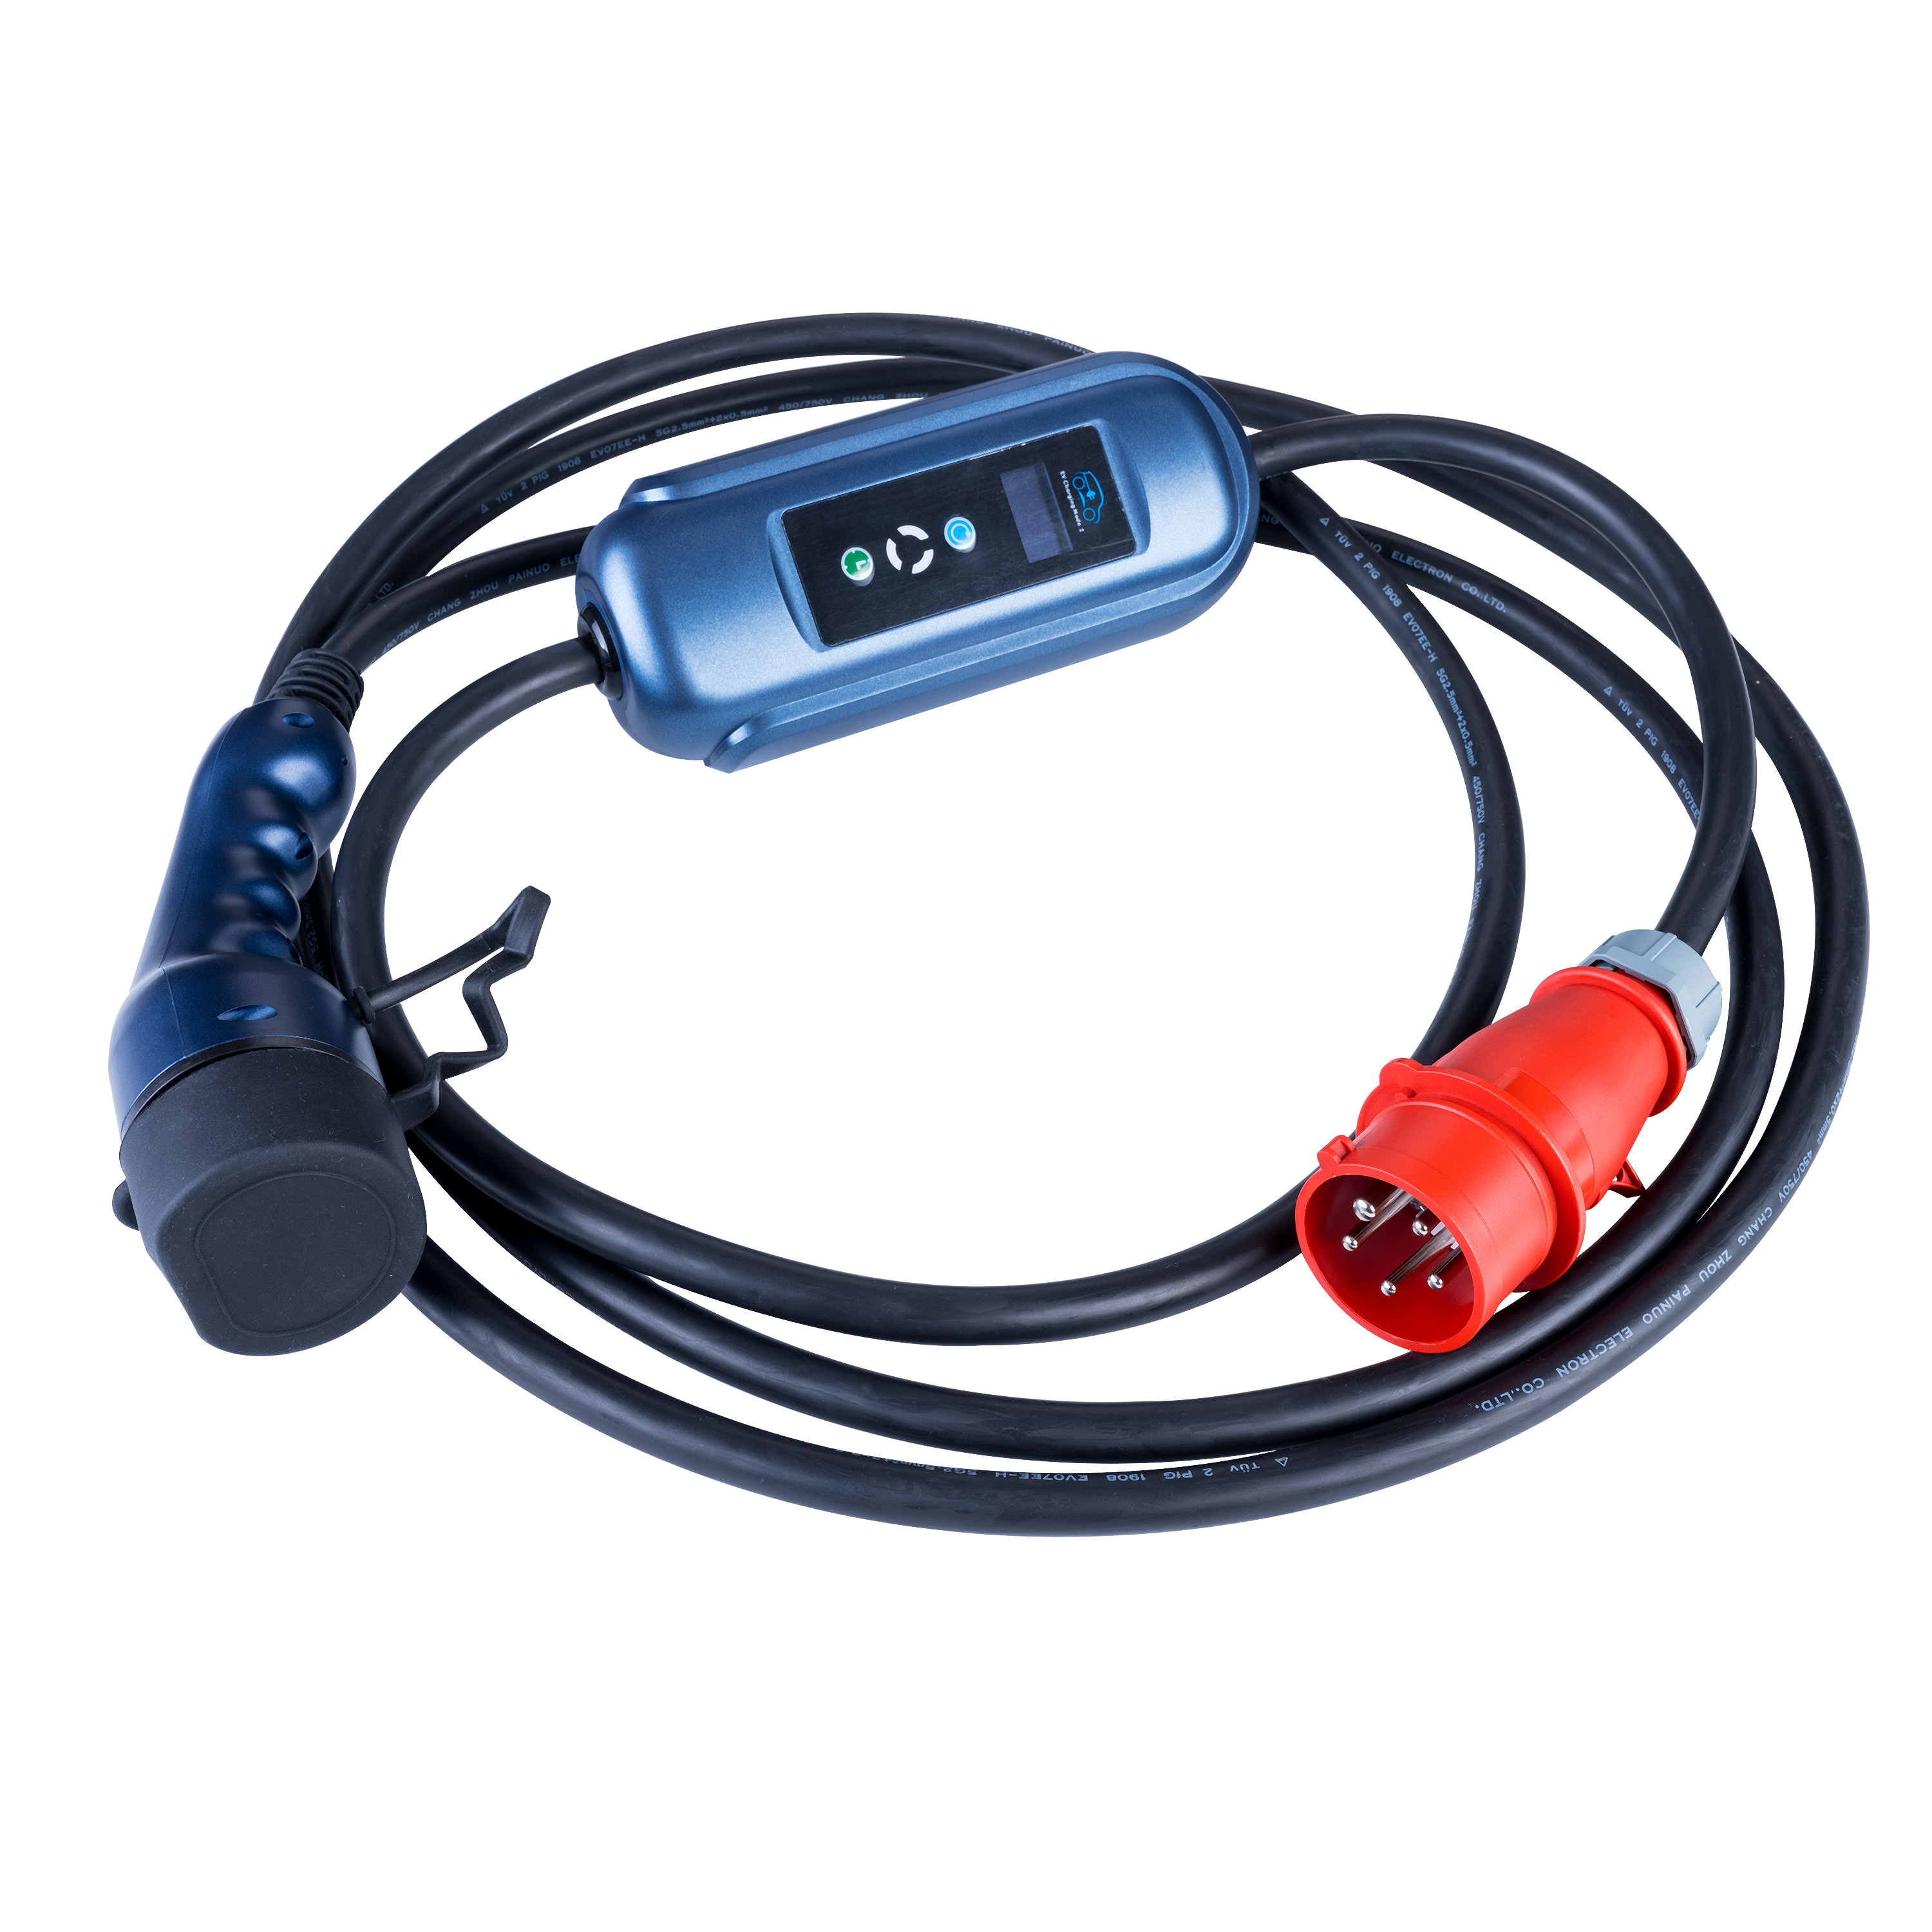 main_image Kabel für Elektroautos AK-EC-12 CEE 5pin / Type2 LCD 3-phasig 16A 11kW 5m